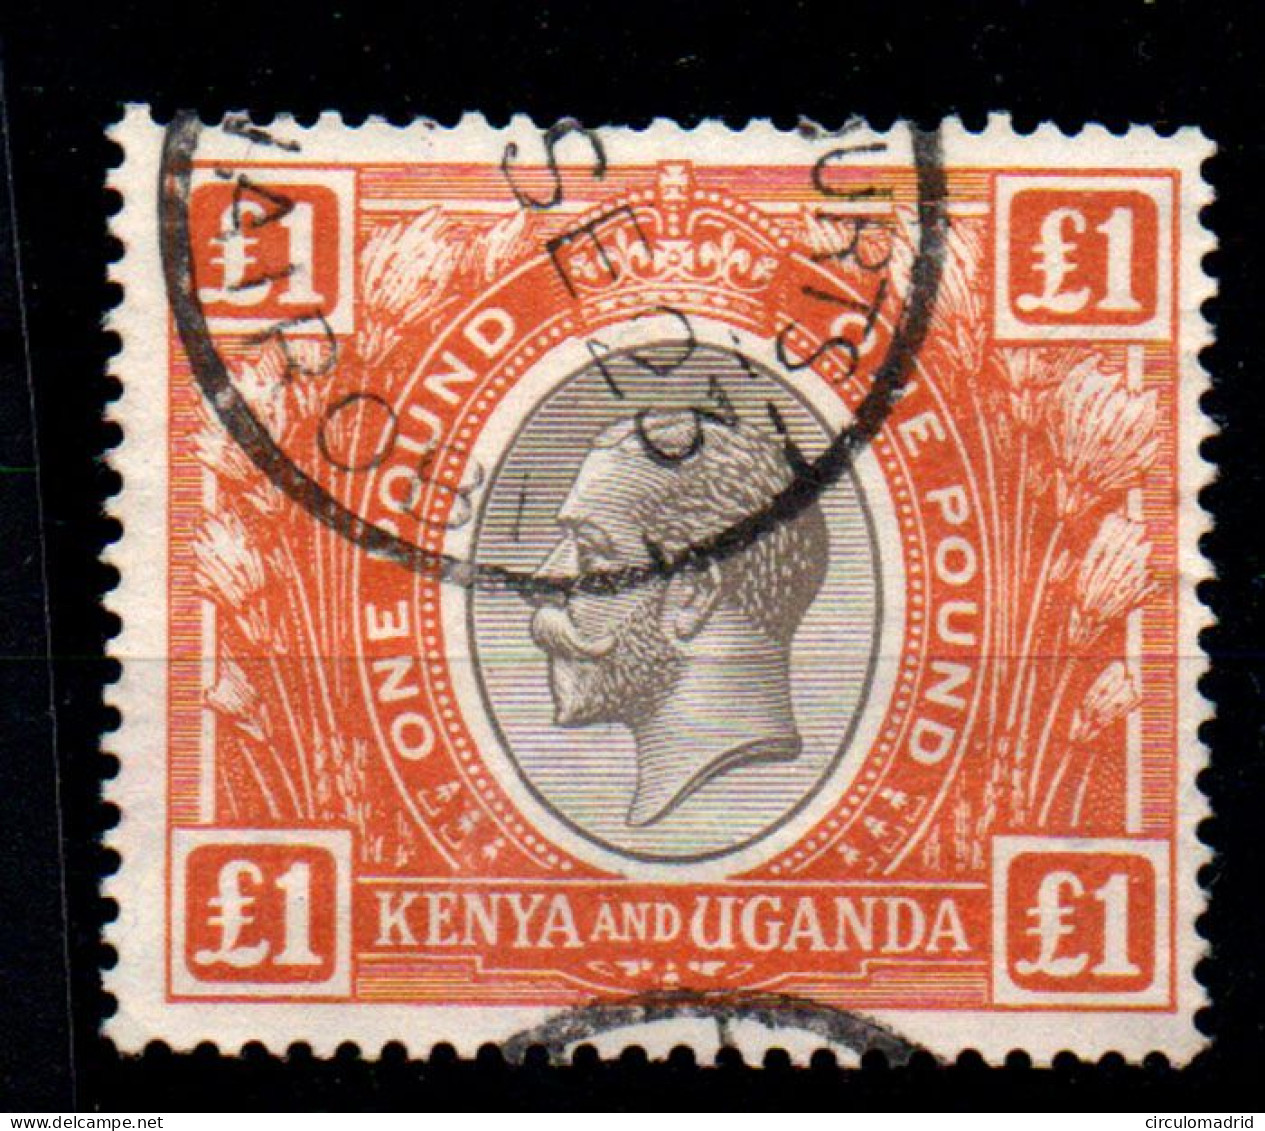 Kenya Y Uganda Nº 18. Año 1922/27 - Kenya & Uganda